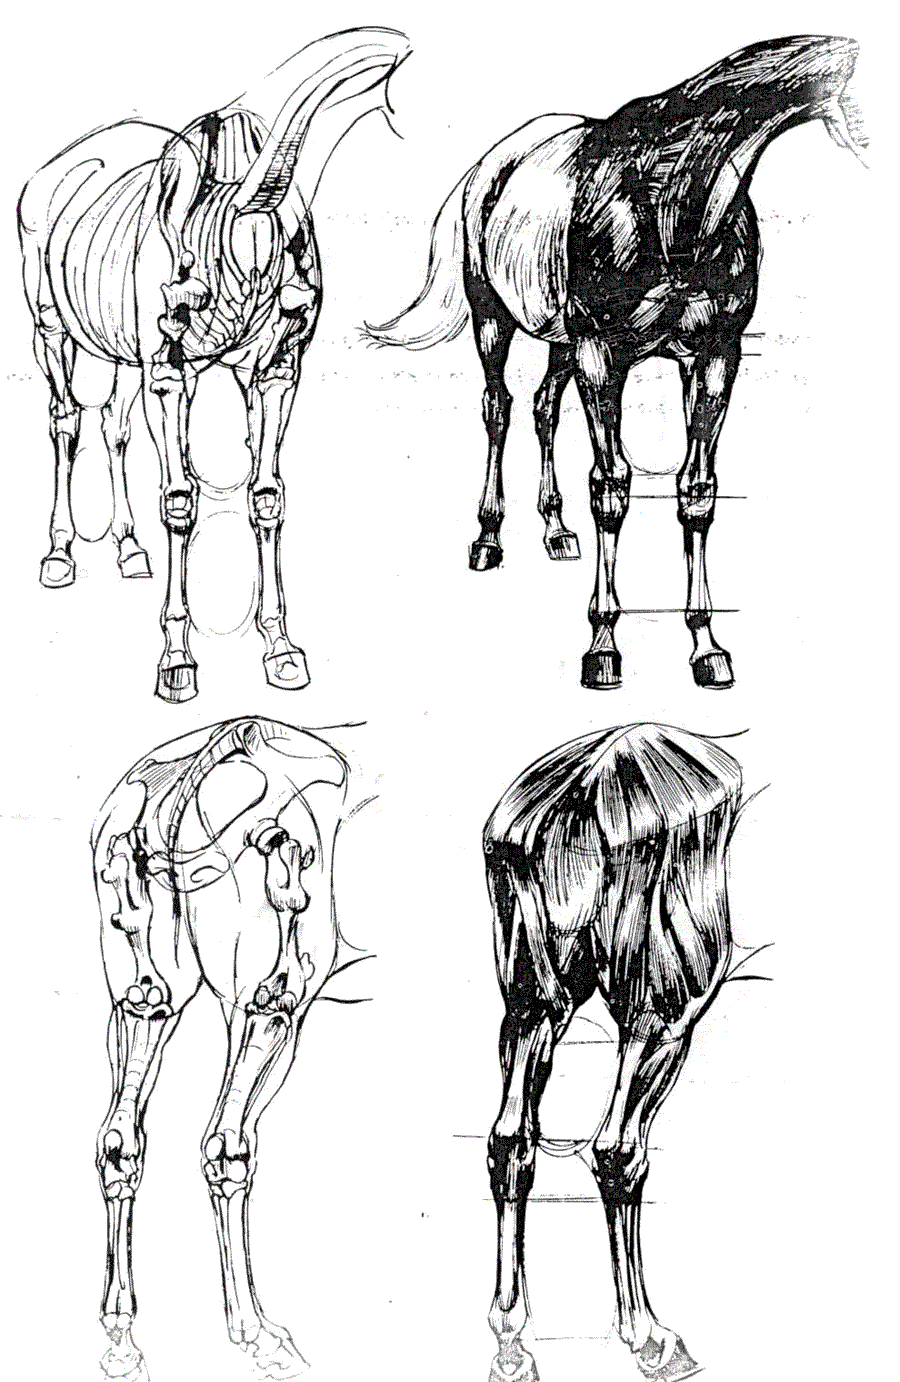   .(The art of animal drawing) -   (Ken Hultgren) ></a>
<script language=JavaScript> 
  var txt = 